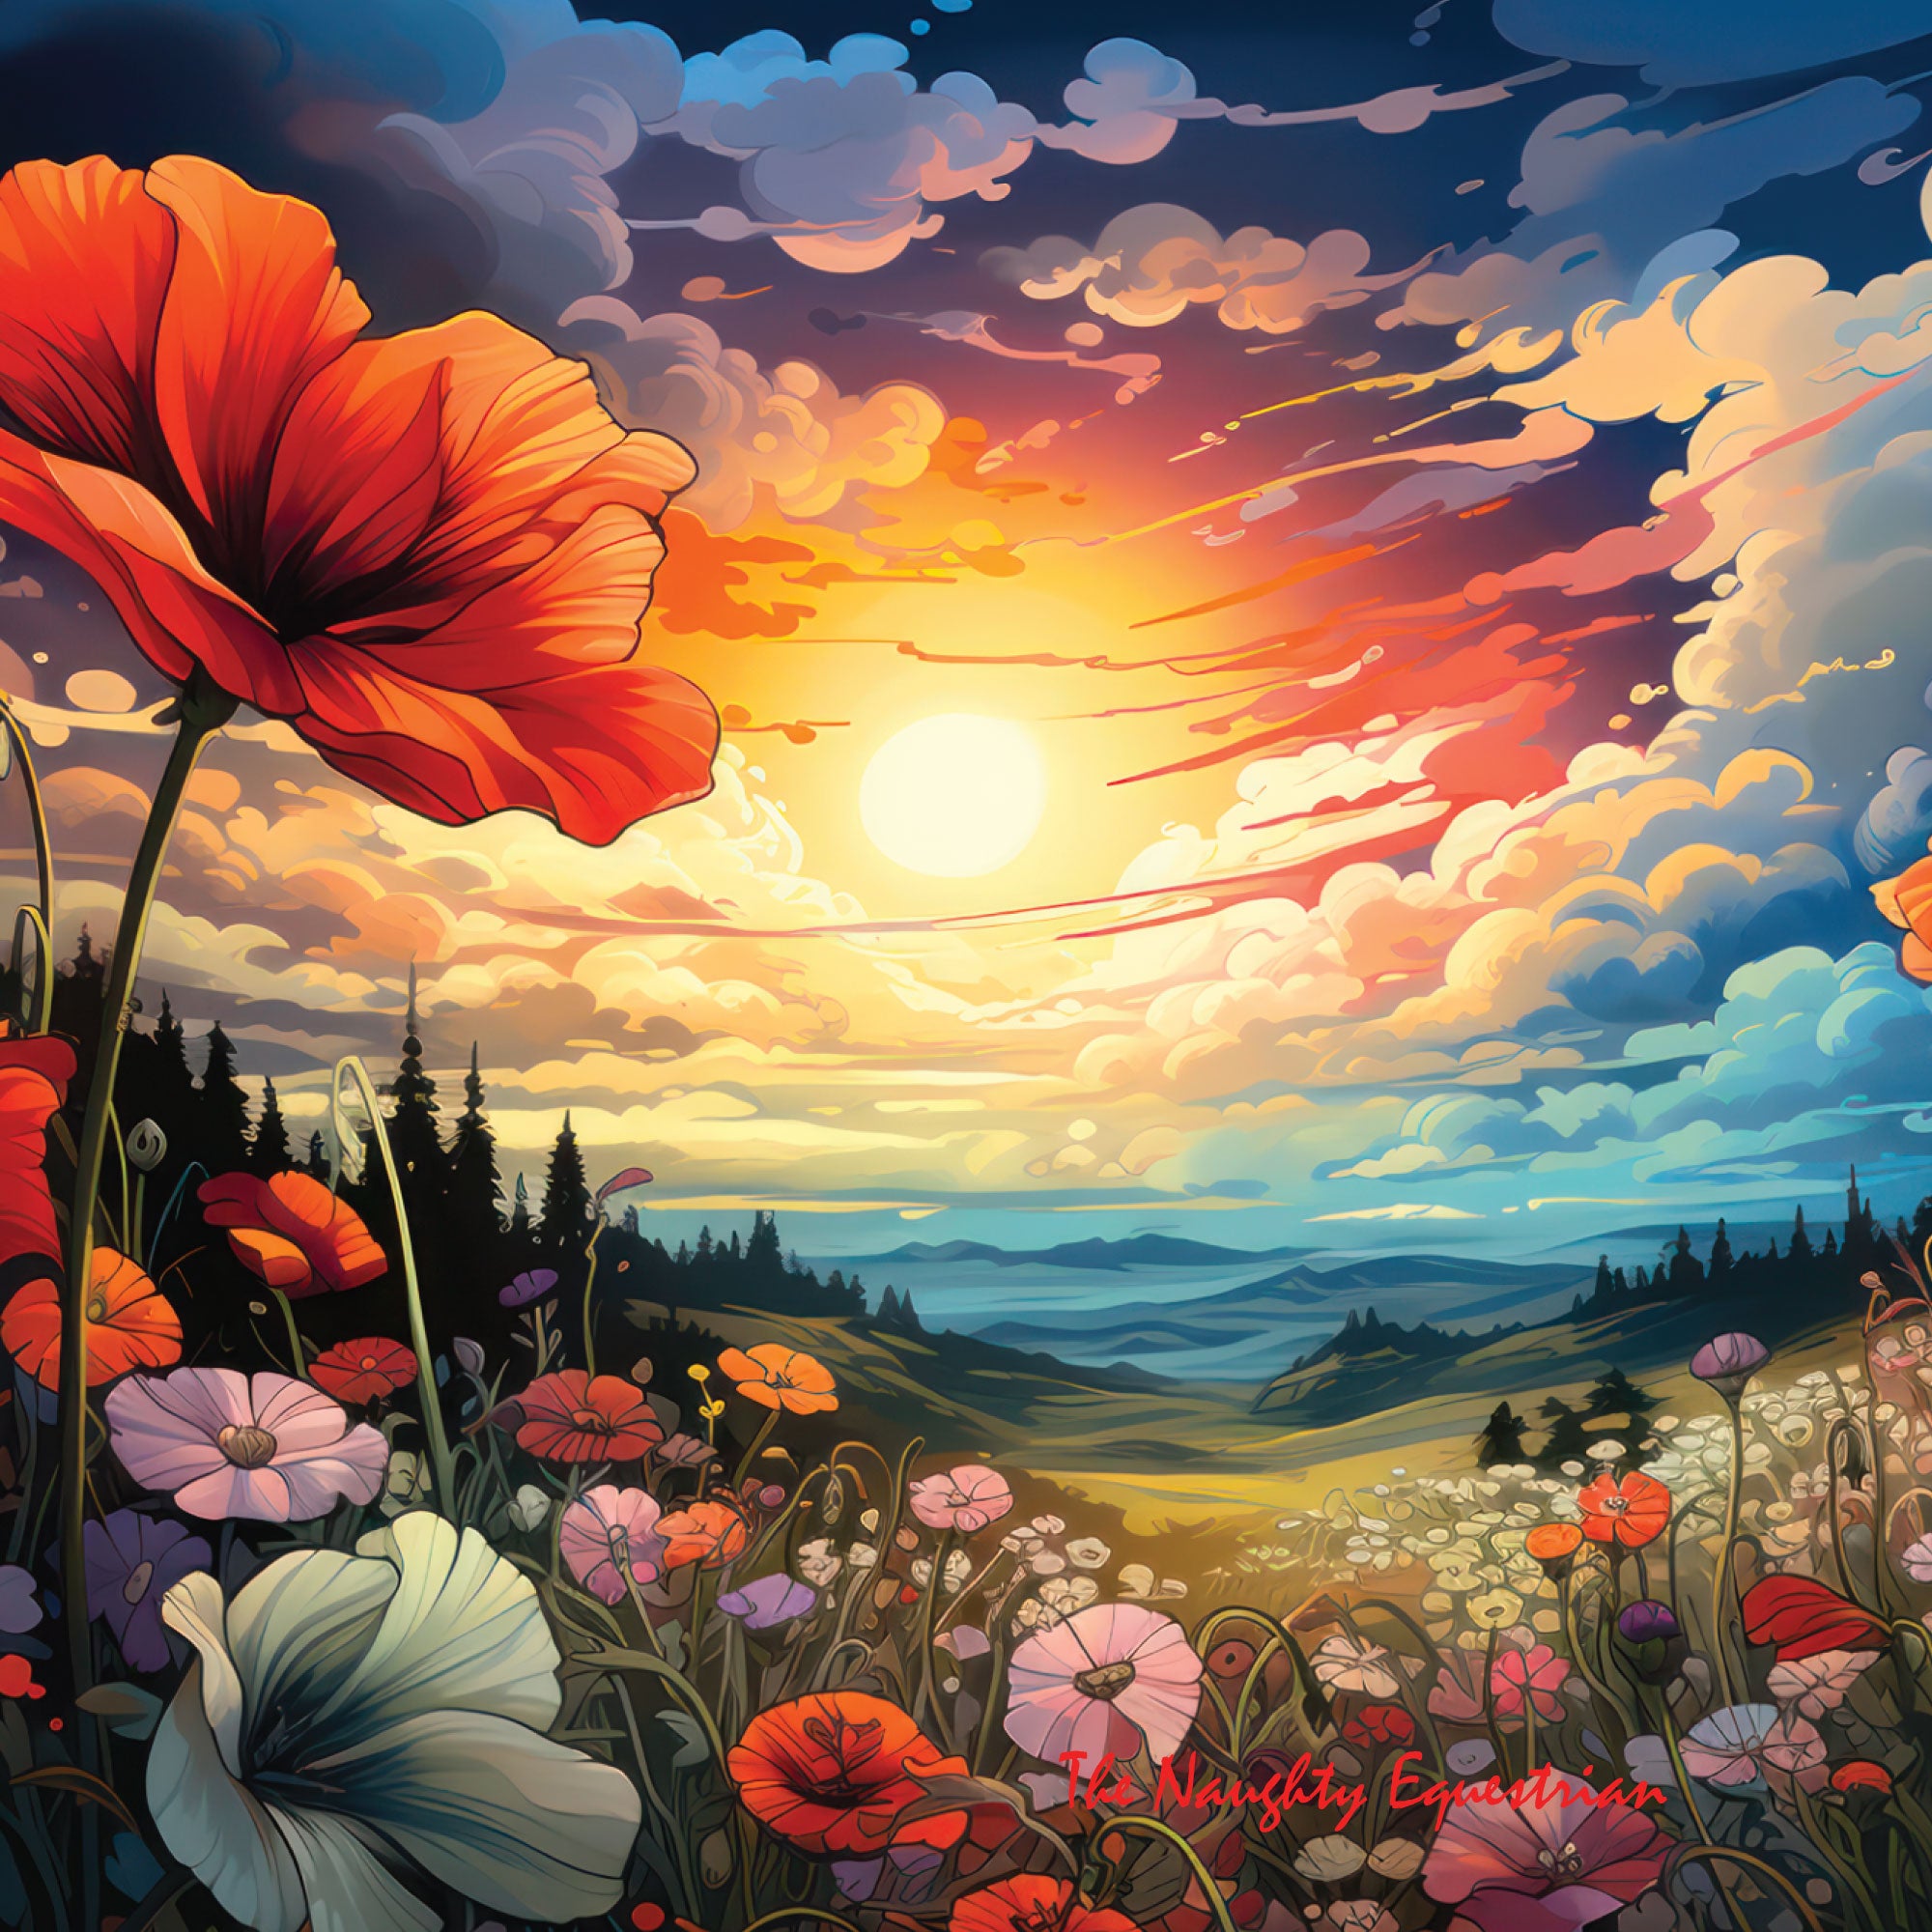 Eternal Beauty: Sunrise Over Wildflower Meadows Coaster Set